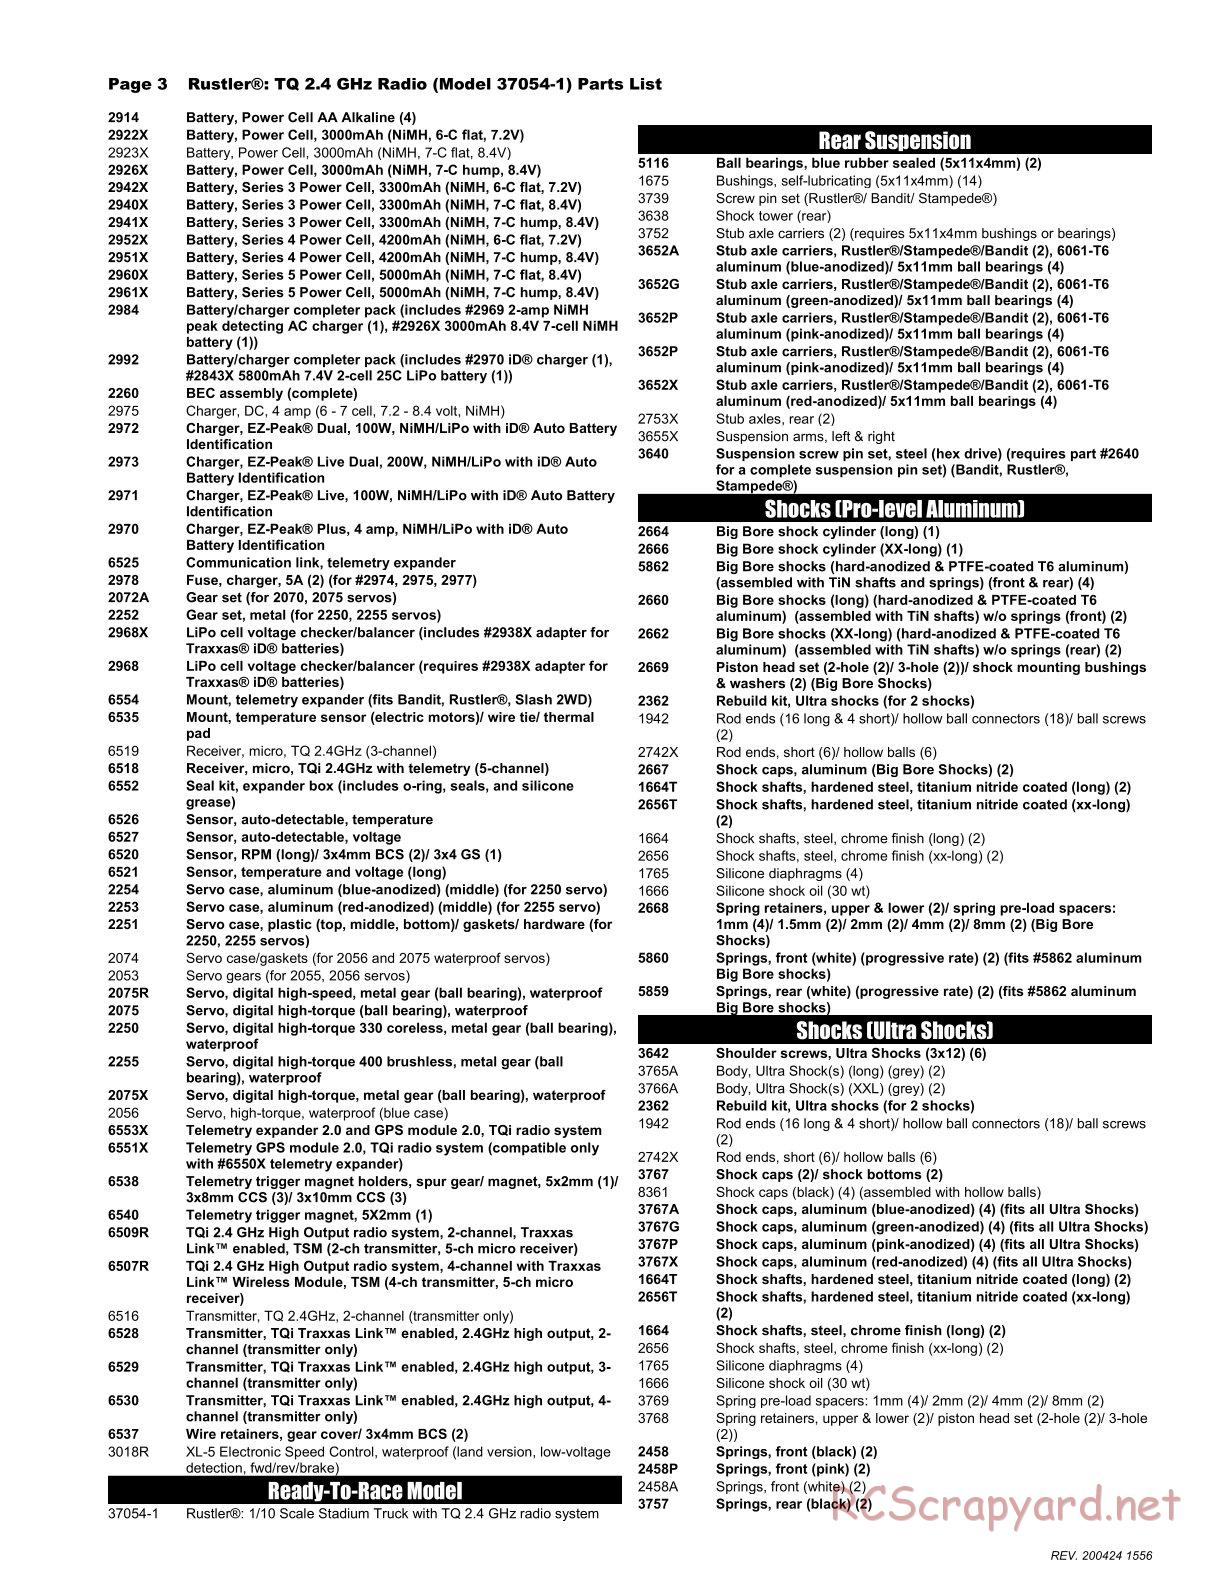 Traxxas - Rustler XL-5 - Parts List - Page 3